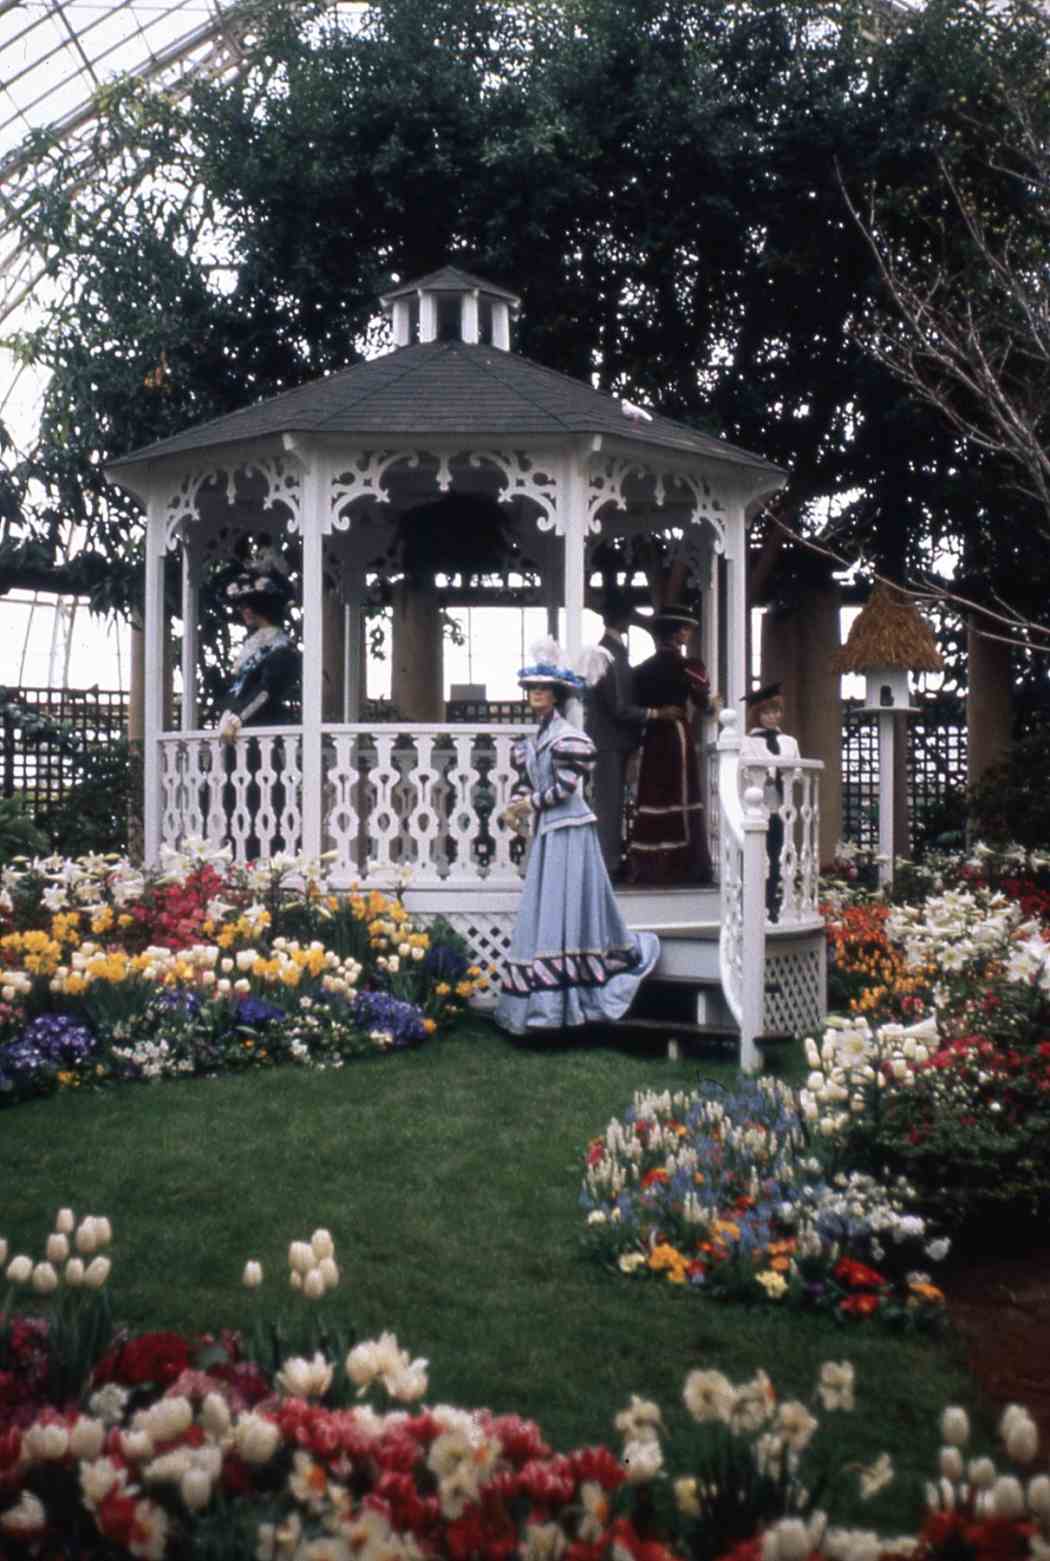 Spring Flower Show 1983: A Victorian Spring